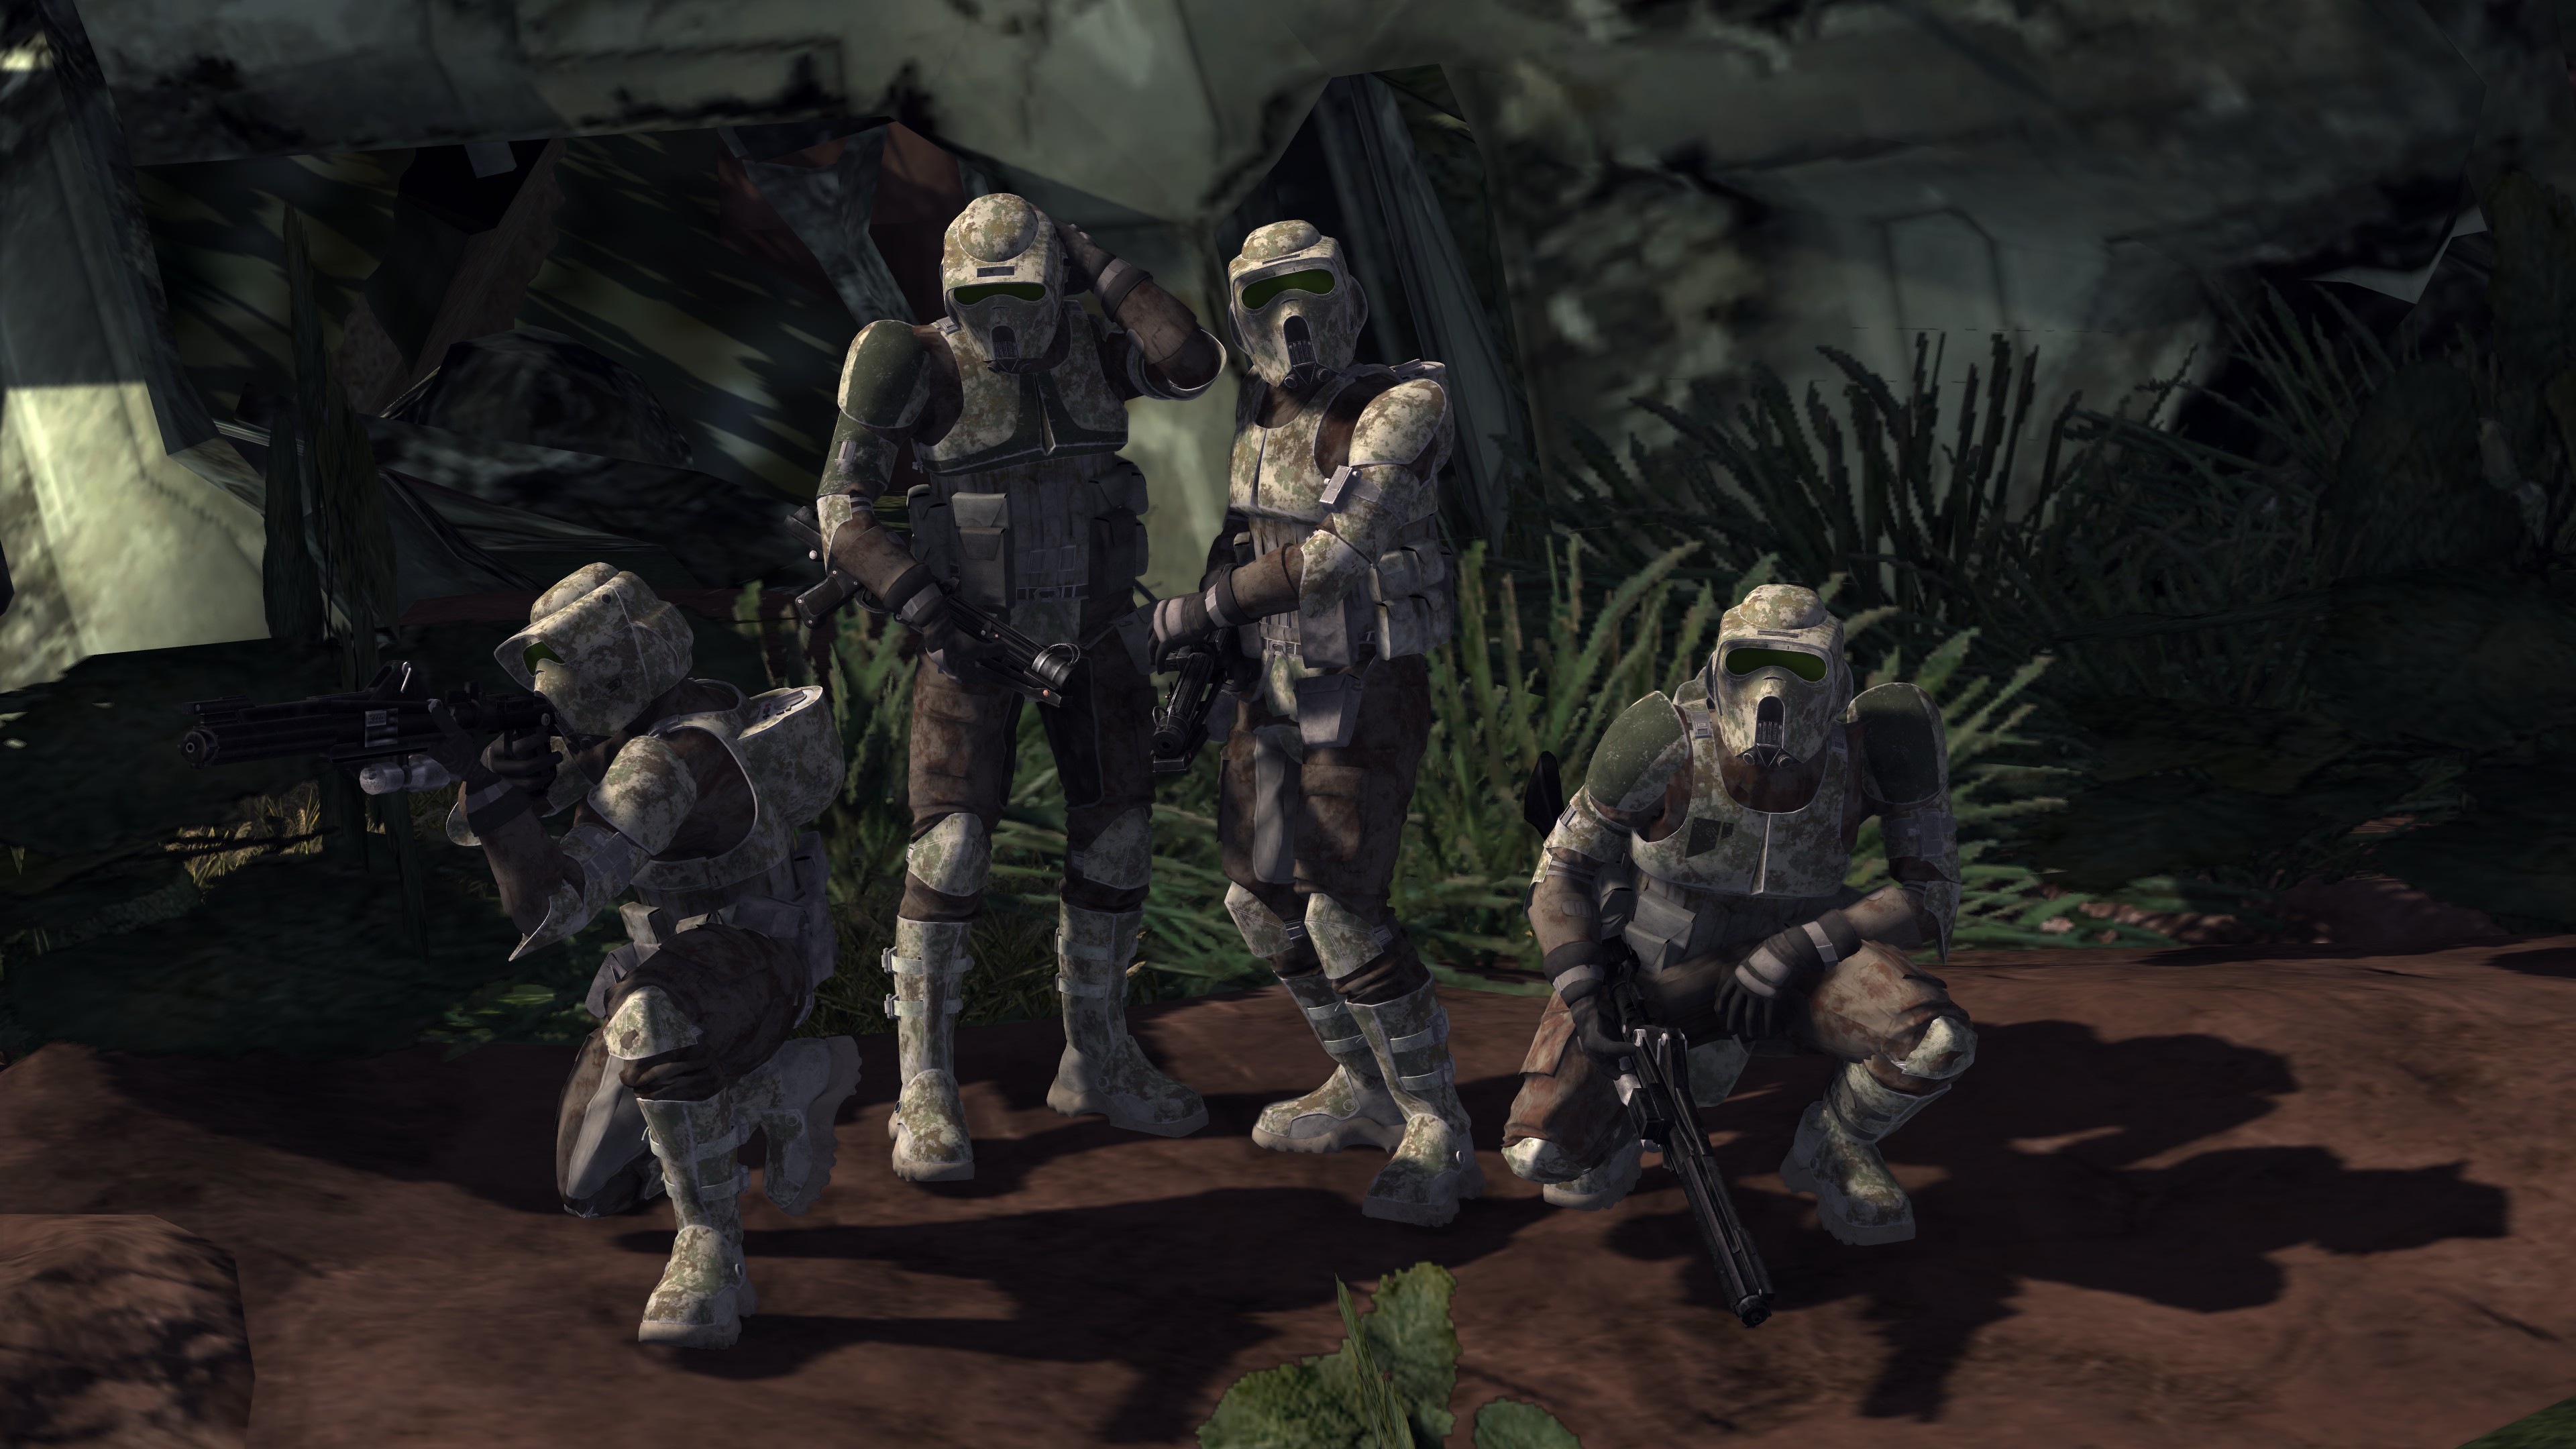 No complicado Hacer las tareas domésticas Brote Star Wars - Galaxy At War mod for Men of War: Assault Squad 2 - Mod DB